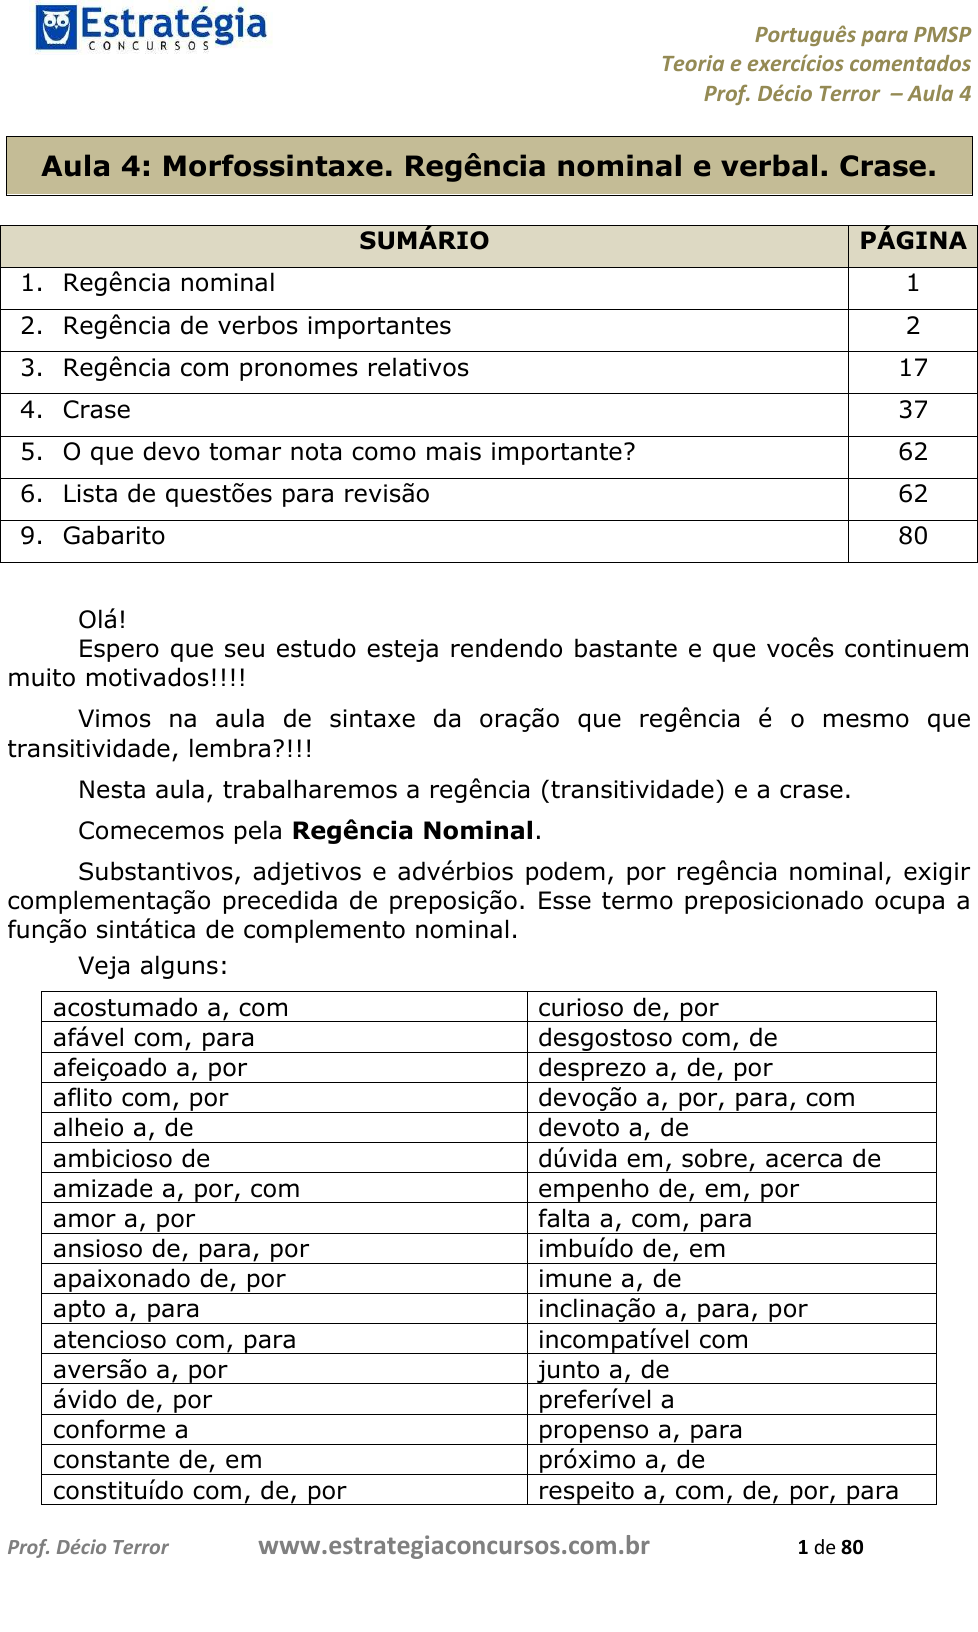 Aula 2 - Pronome Relativo.pdf